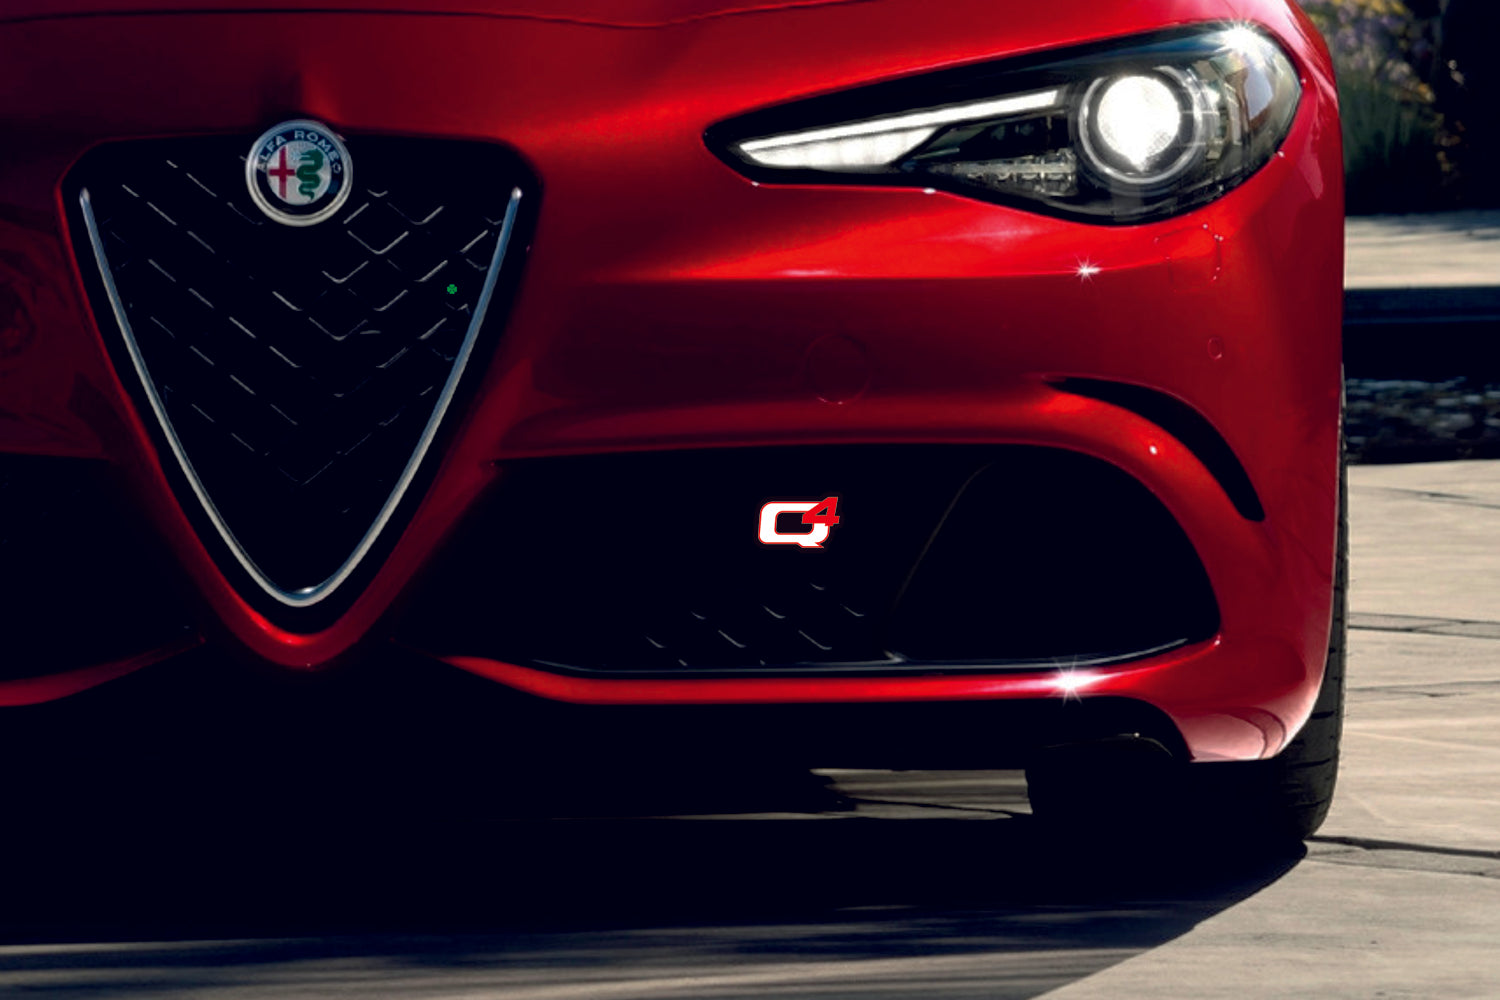 Alfa Romeo Radiator grille emblem with Q4 logo - decoinfabric